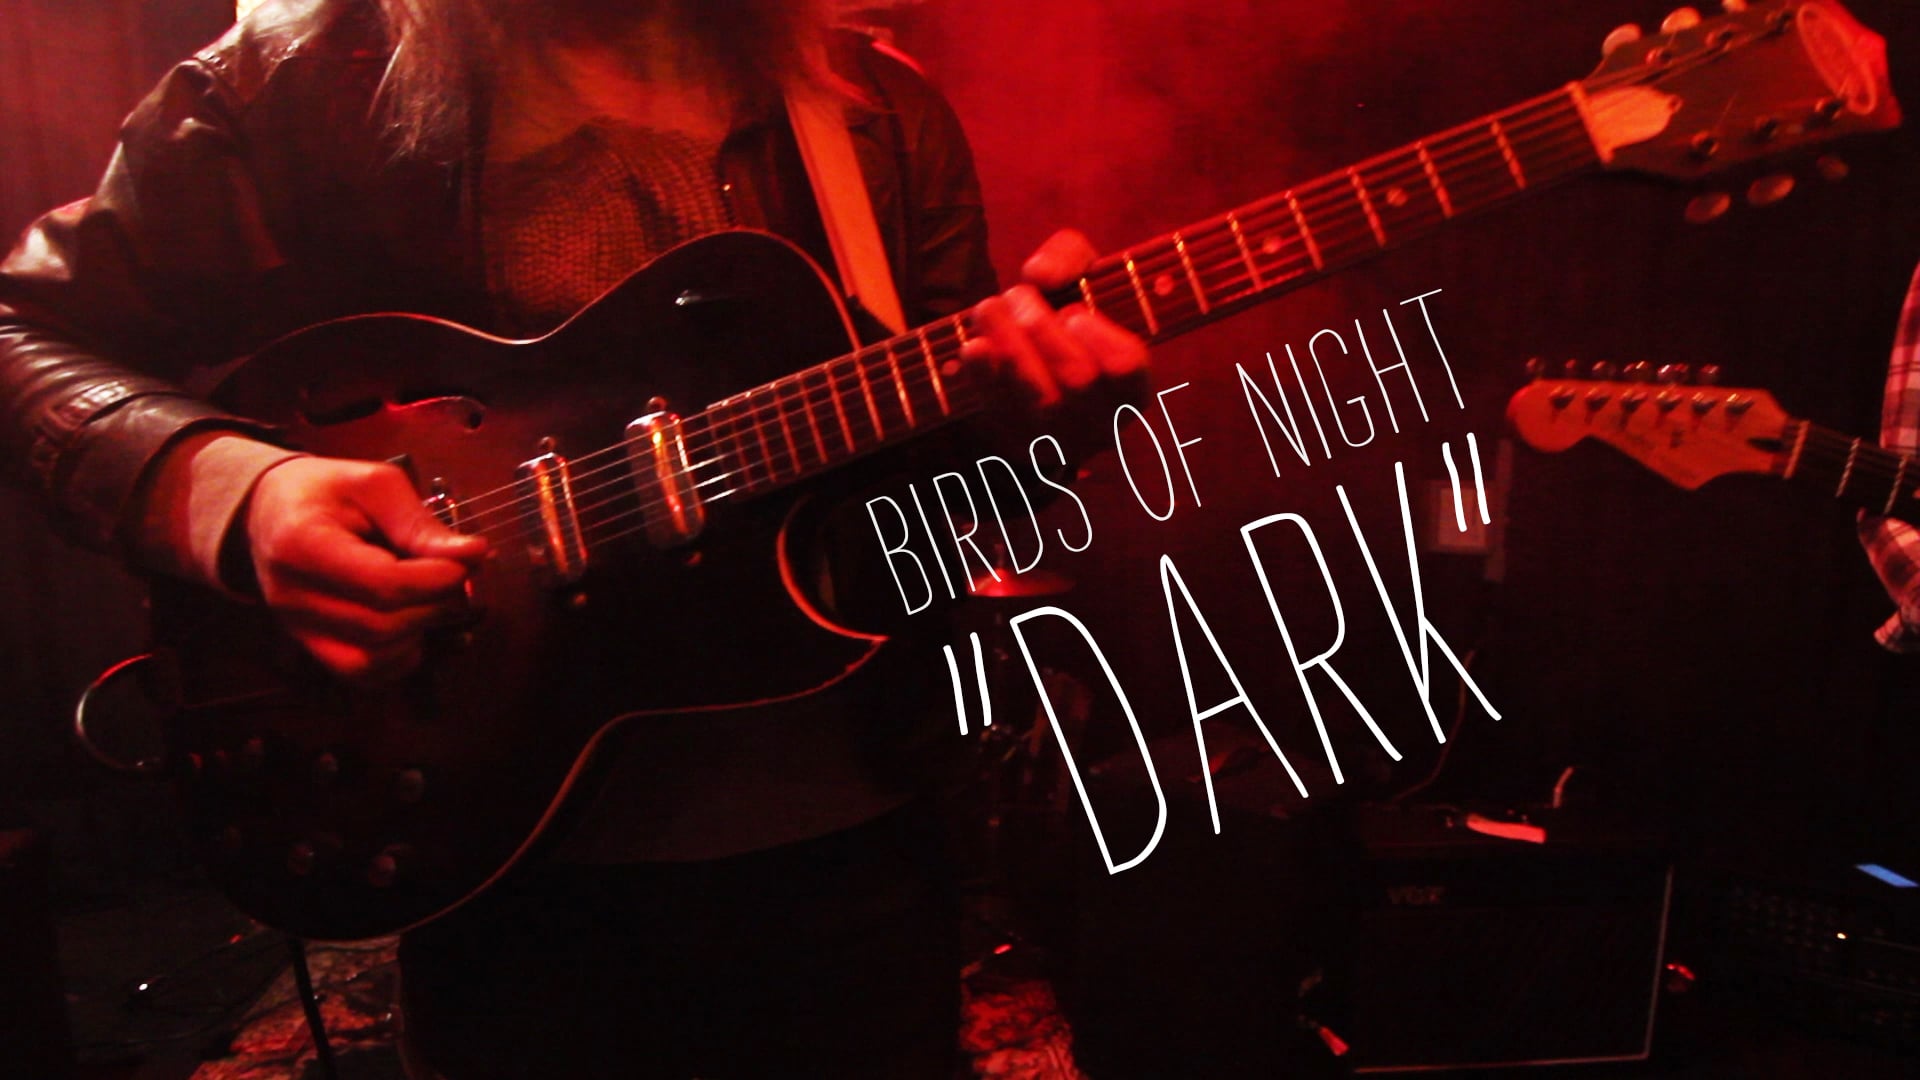 The Birds of Night - "Dark"